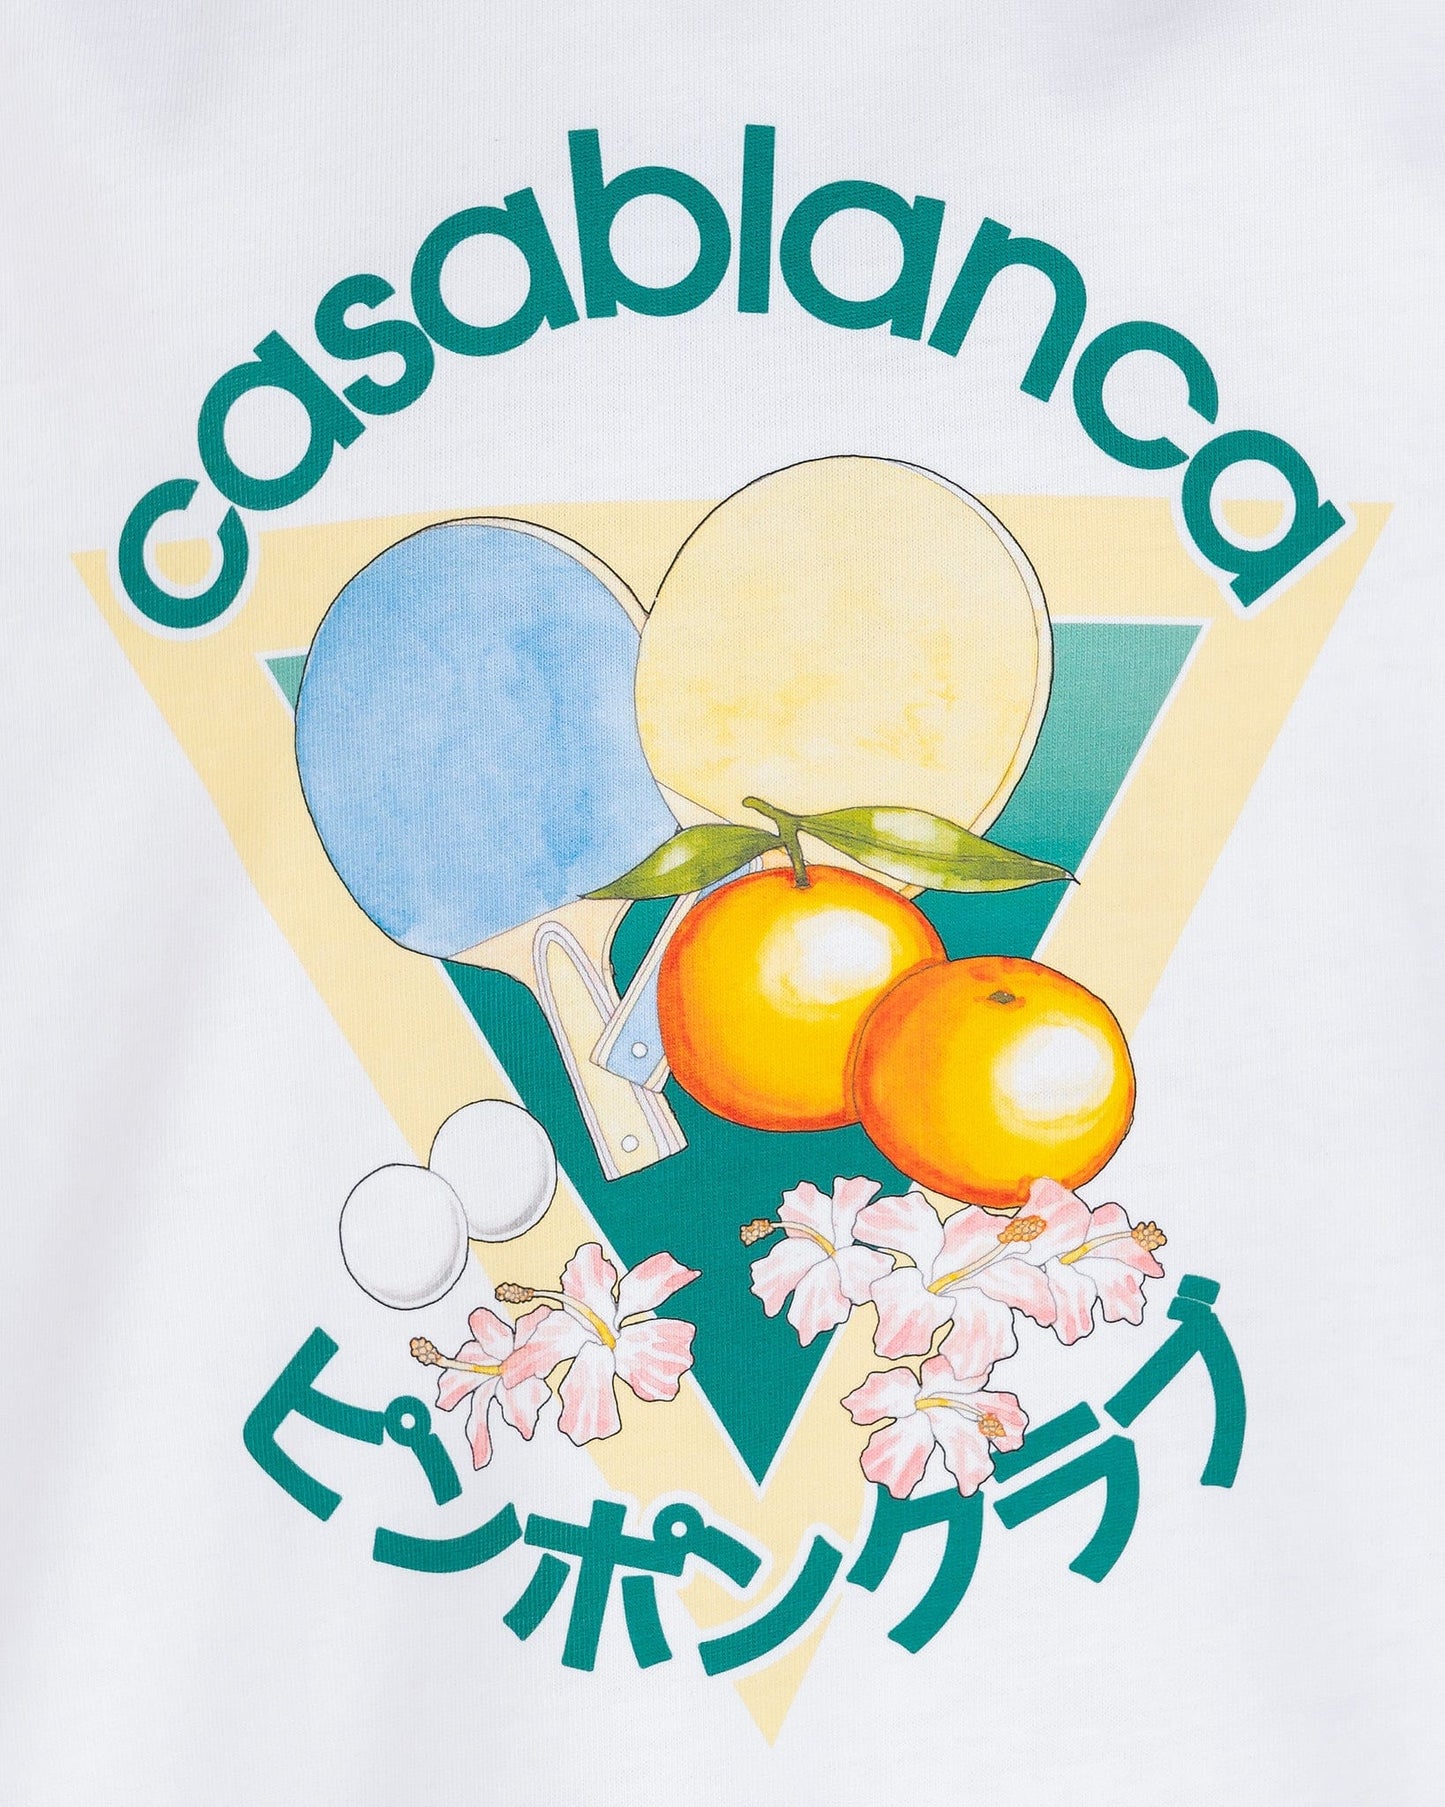 Casablanca Men's T-Shirts Ping Pong Club T-Shirt in White